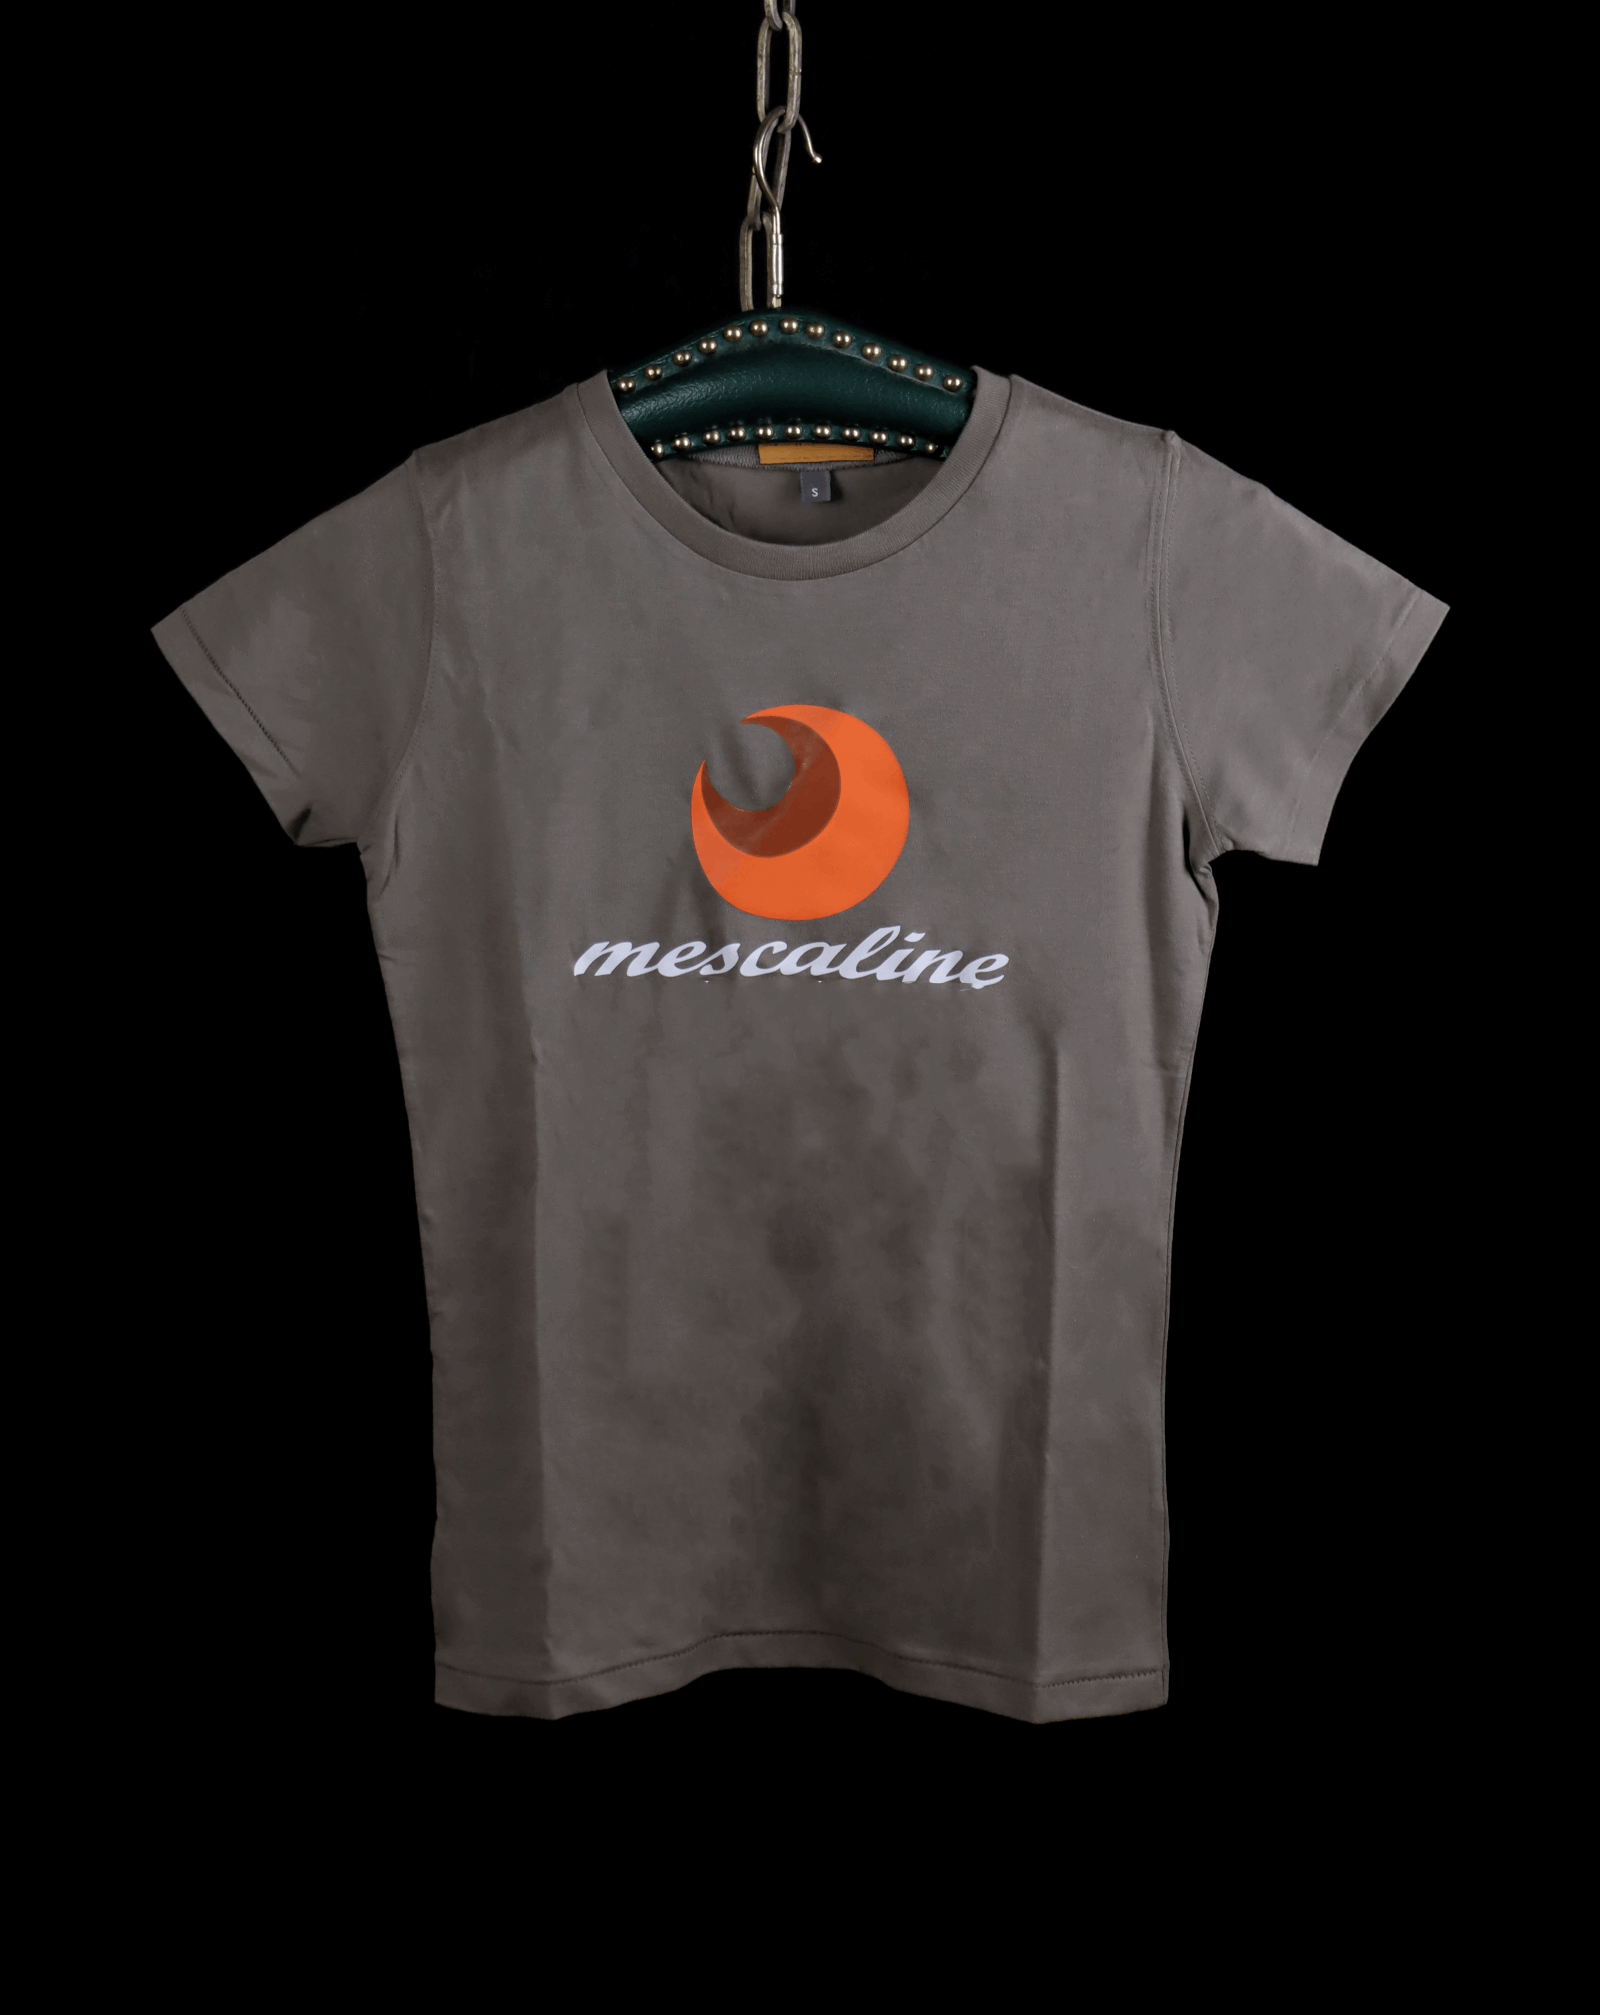 Mescaline Shirt